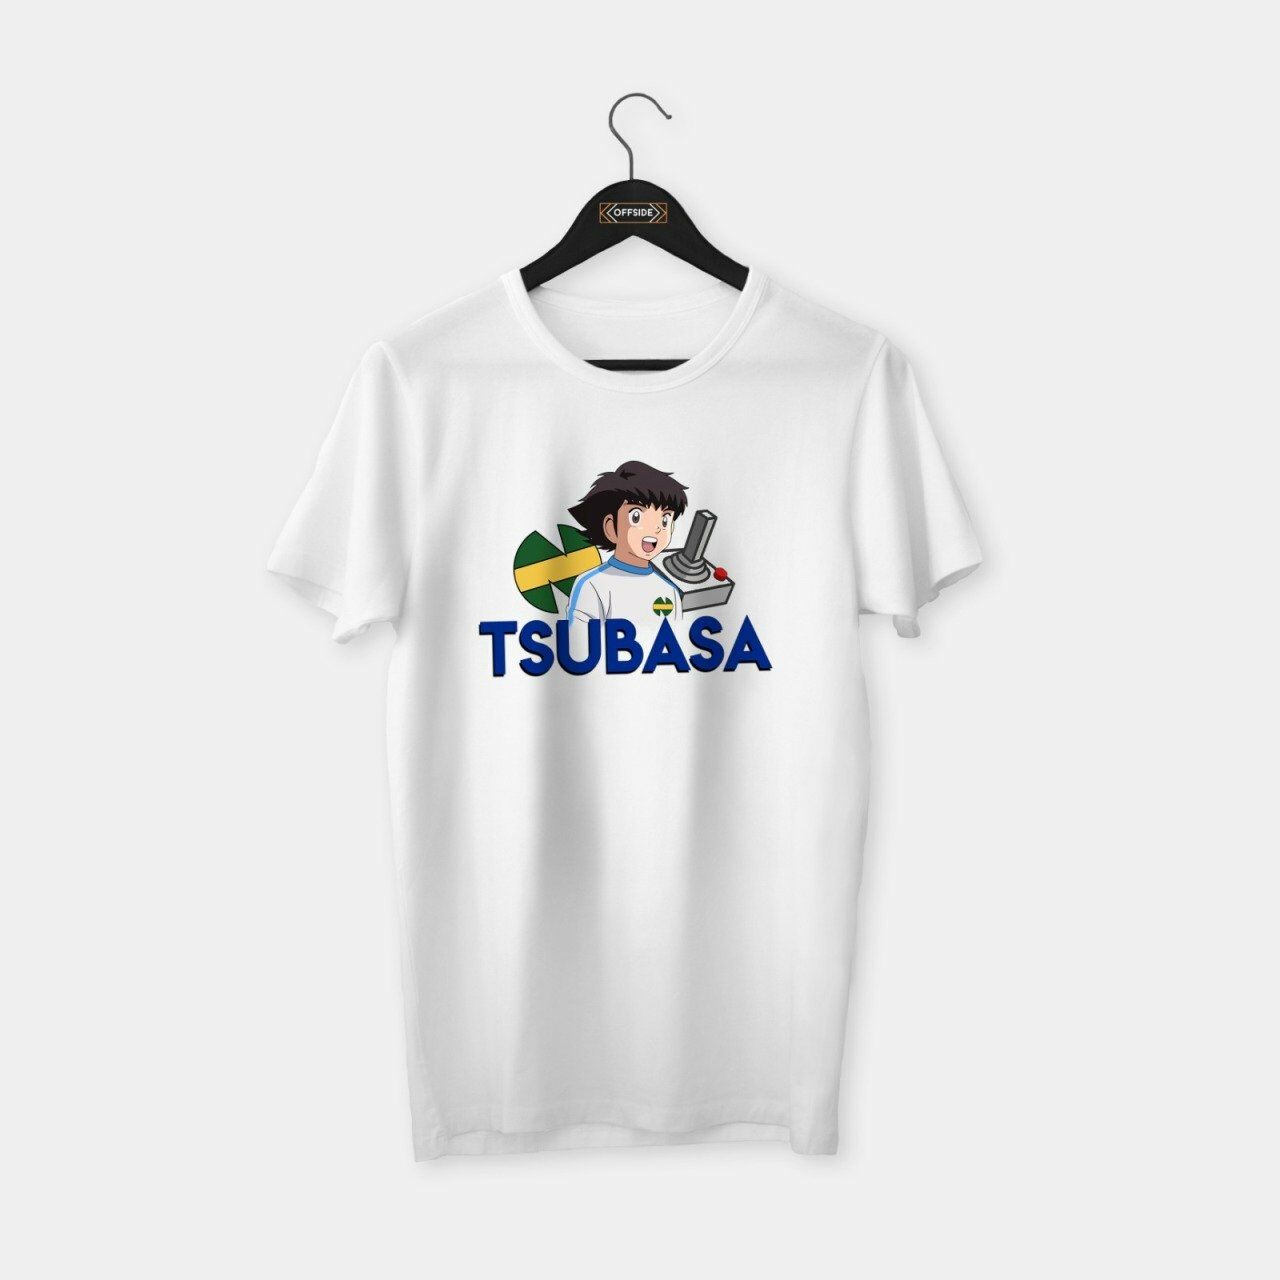 Tsubasa II T-shirt